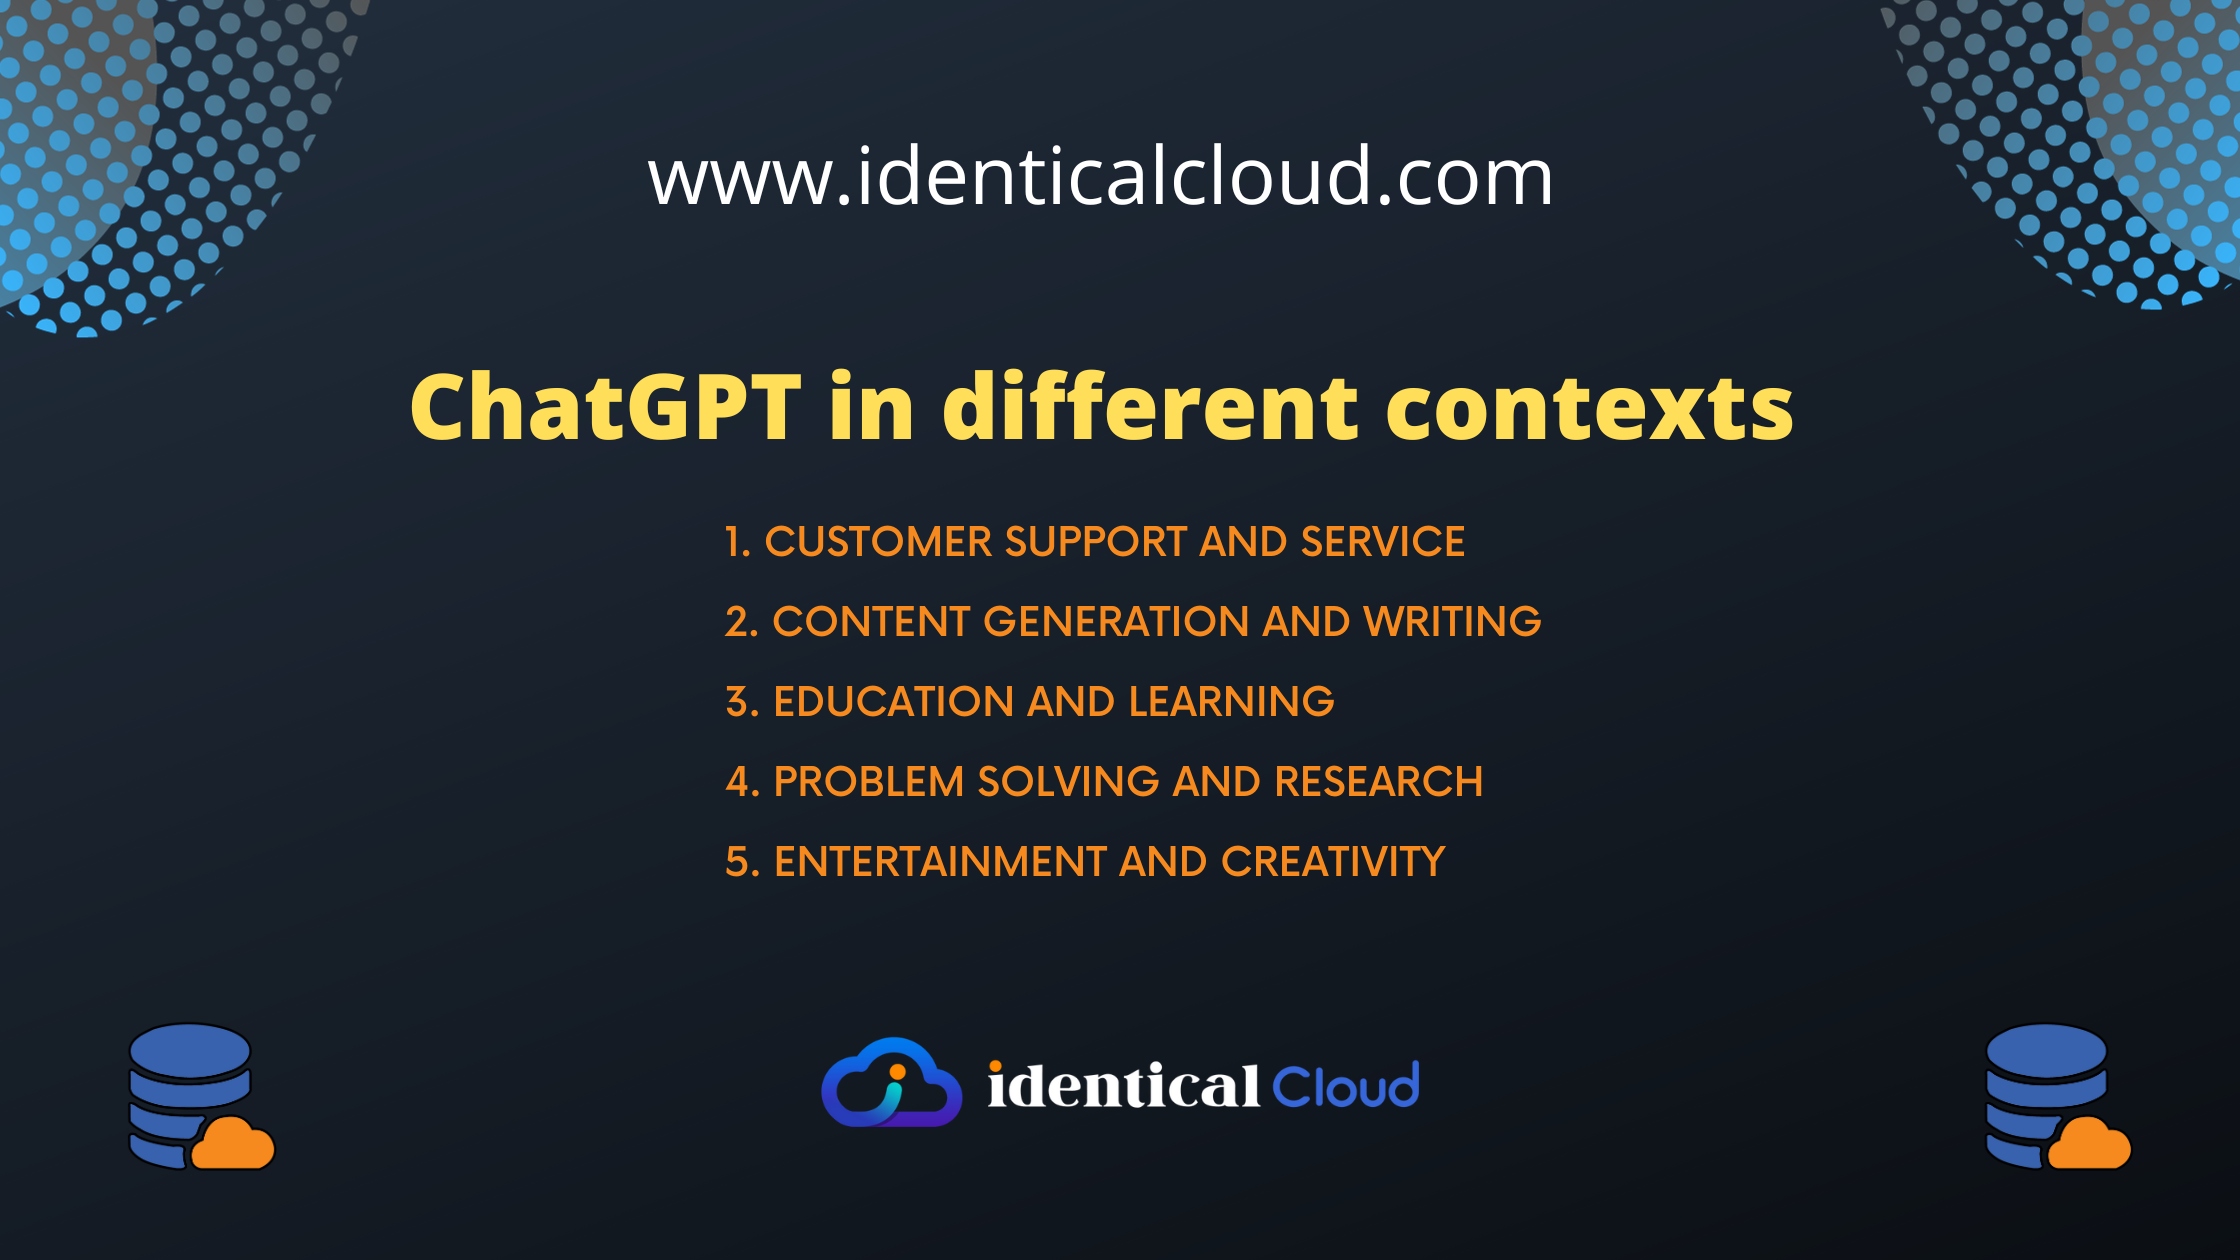 ChatGPT in different contexts - identicalcloud.com